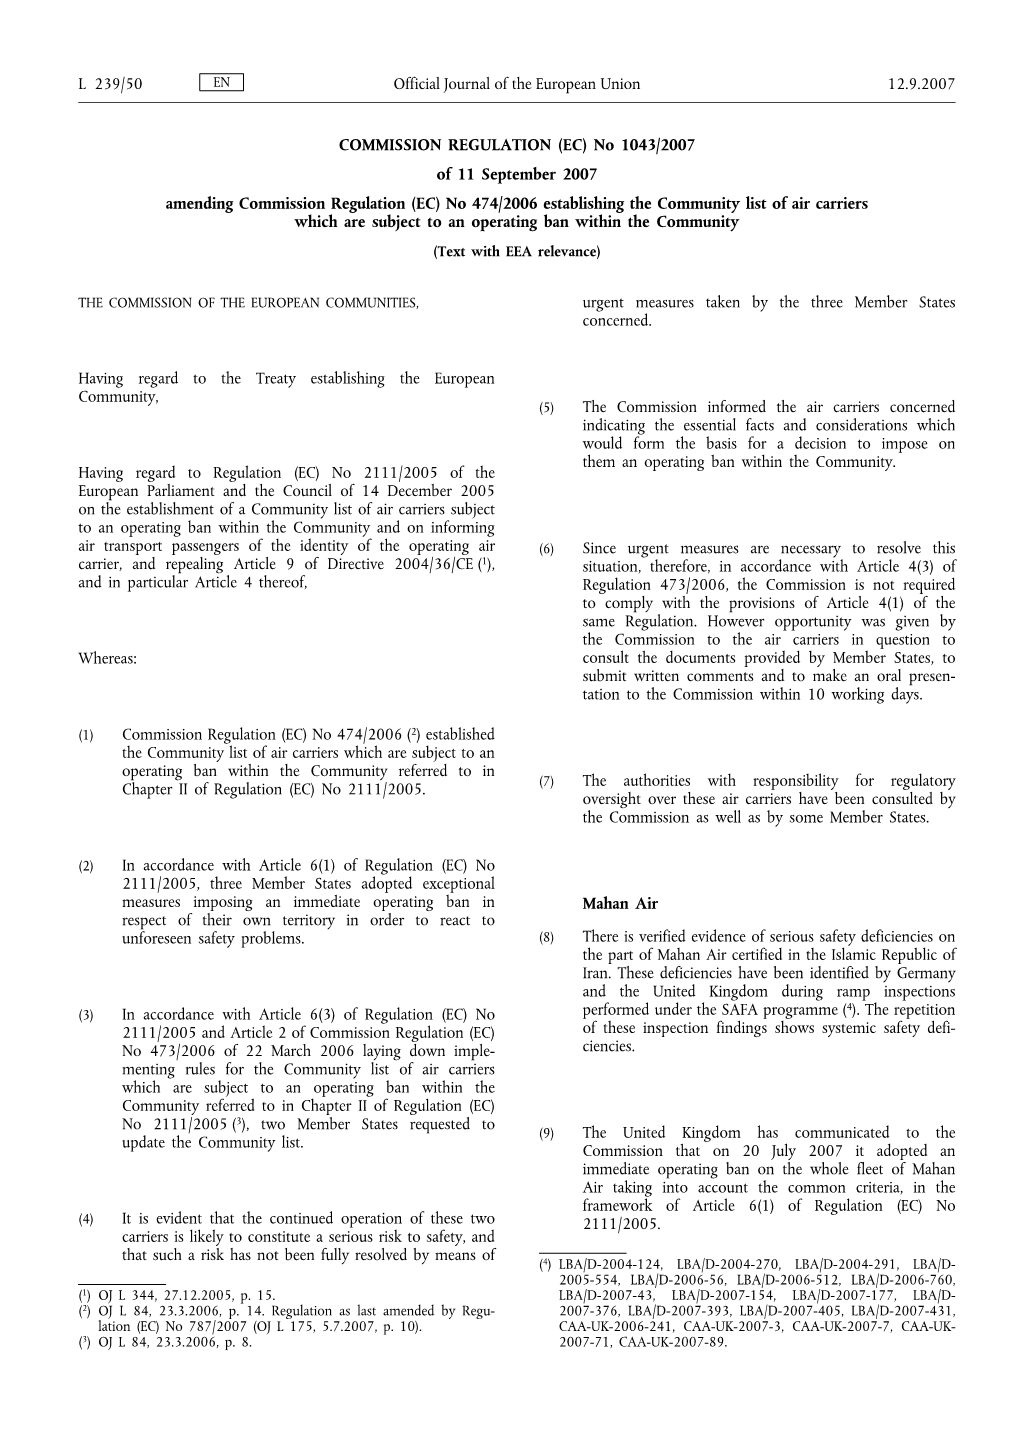 No 1043/2007 of 11 September 2007 Amending Commission Regulation